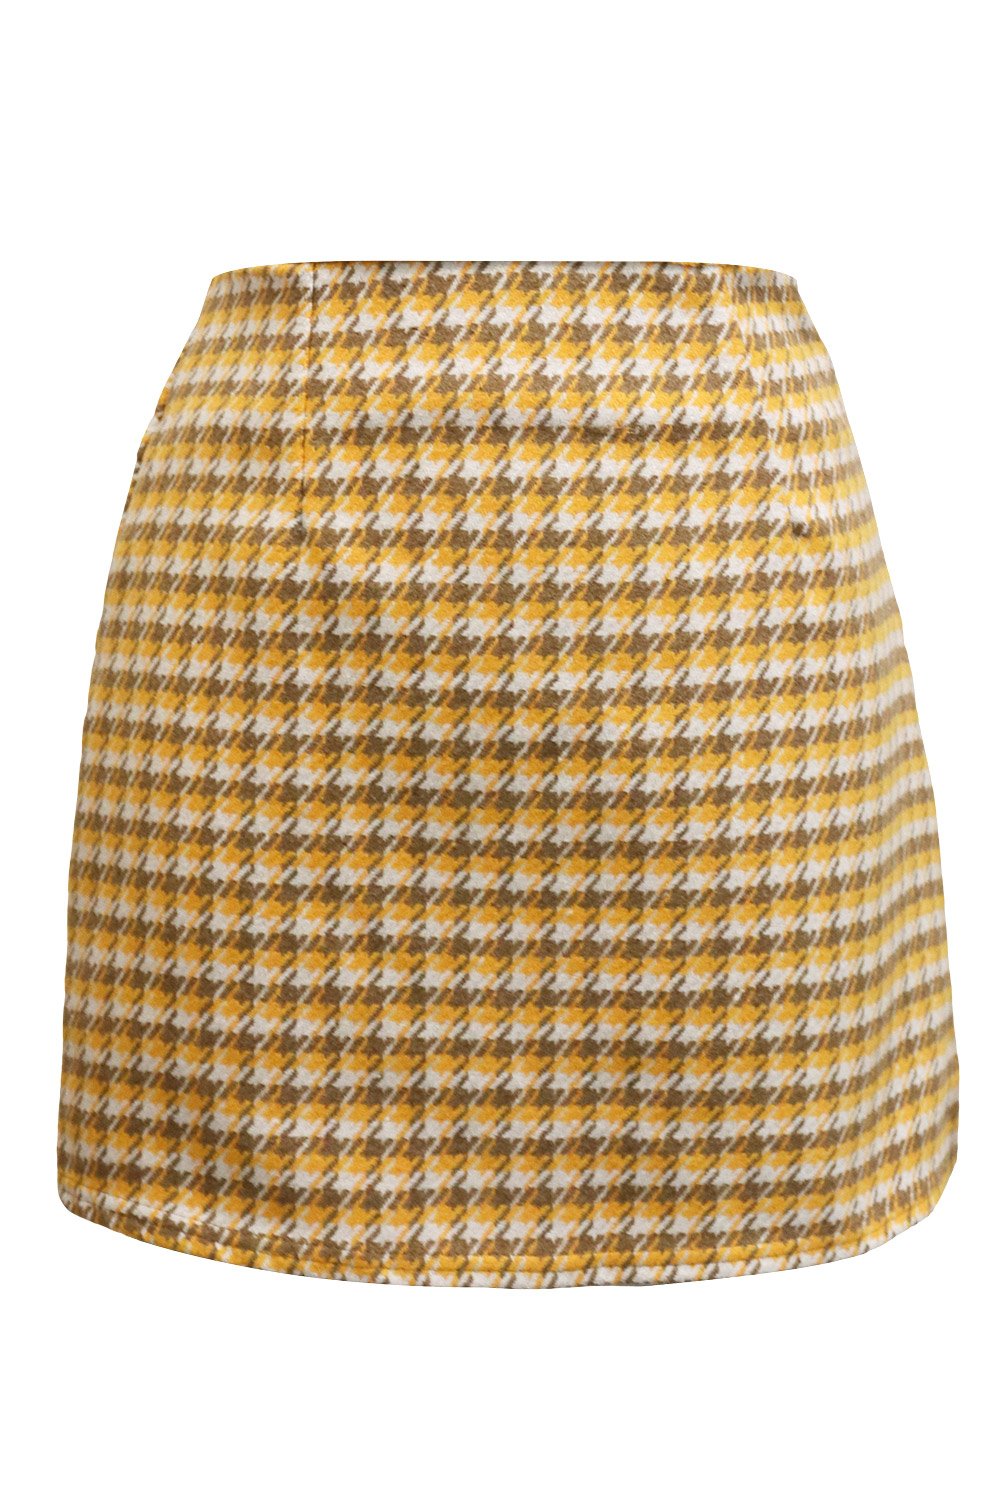 storets.com Zendaya Houndstooth Mini Skirt